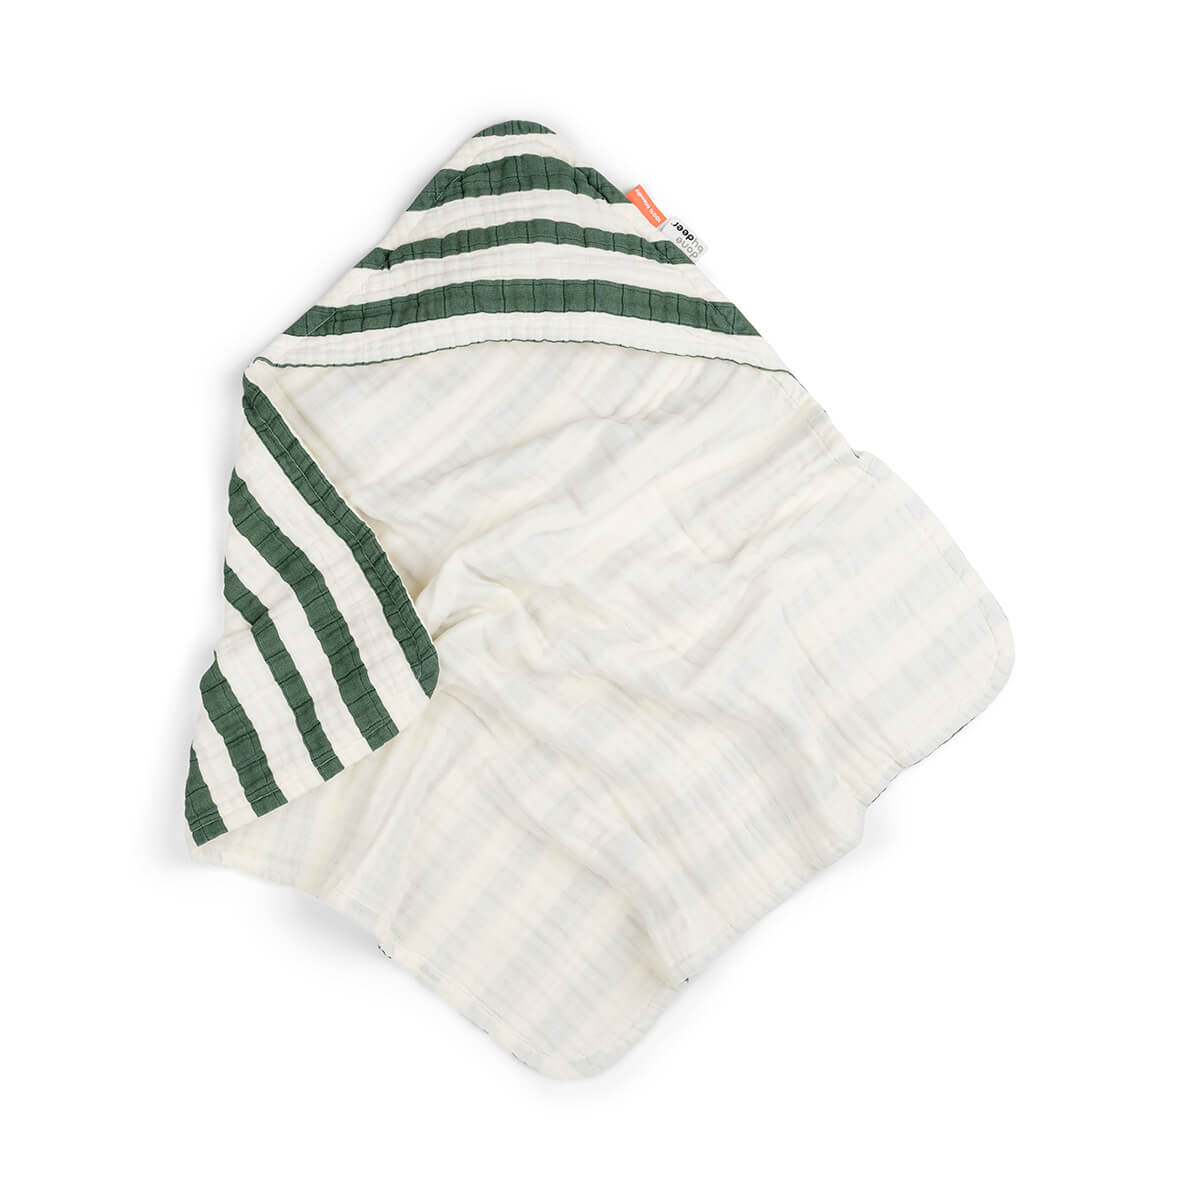 Hooded towel - Stripes - Green